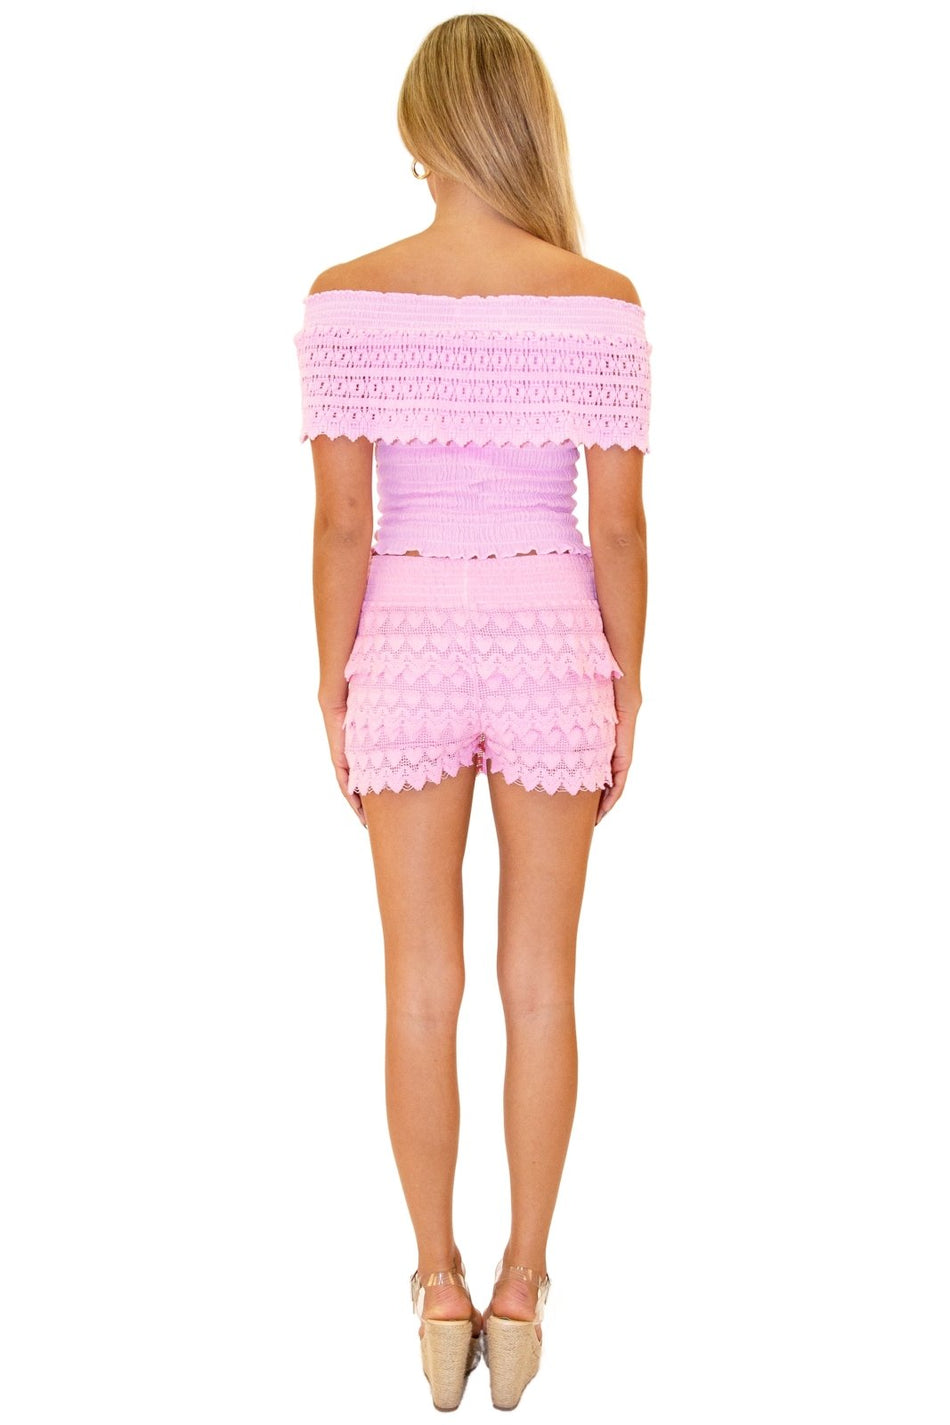 Polly' Tiered Crochet Skort Pink - Seaspice Resort Wear